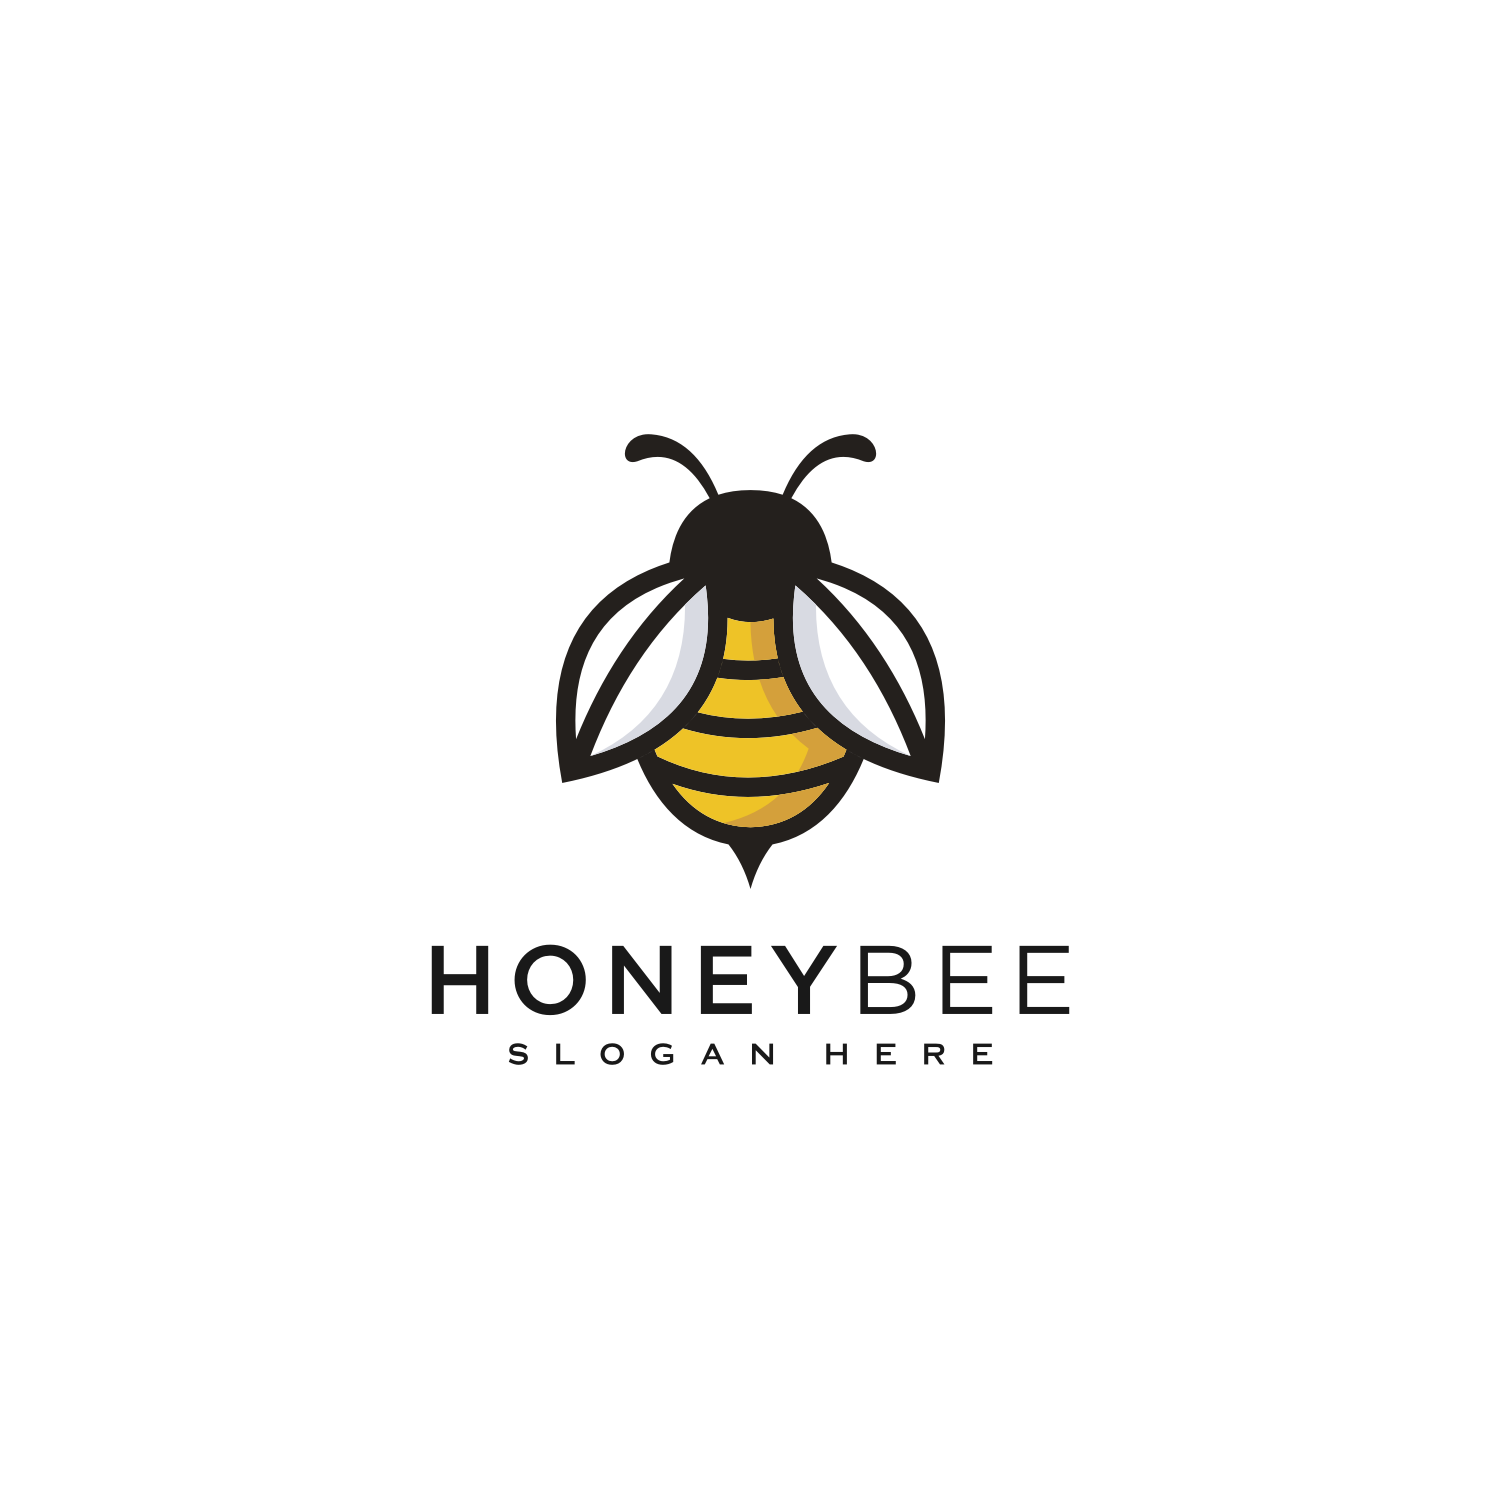 3 Honey Bee Animals Logo Vector Preview Image.